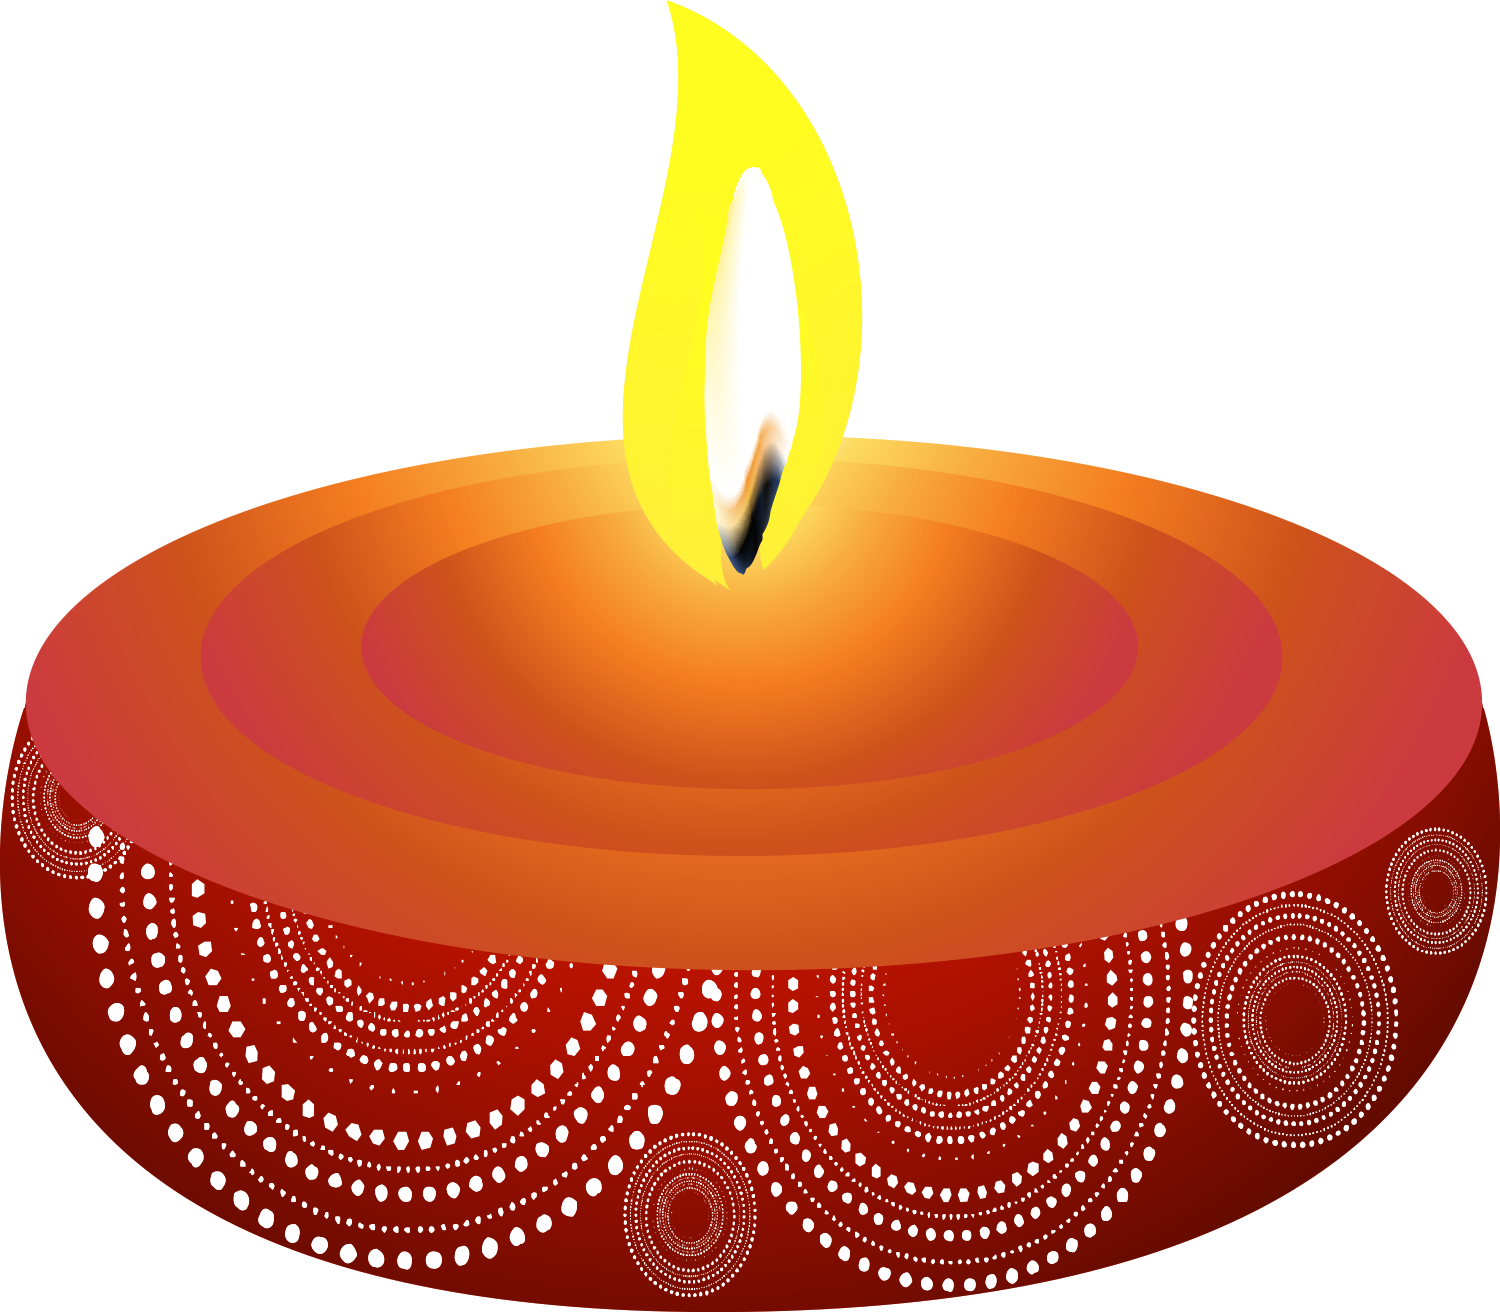 Diwali Festival Clay Lamp Illustration PNG image